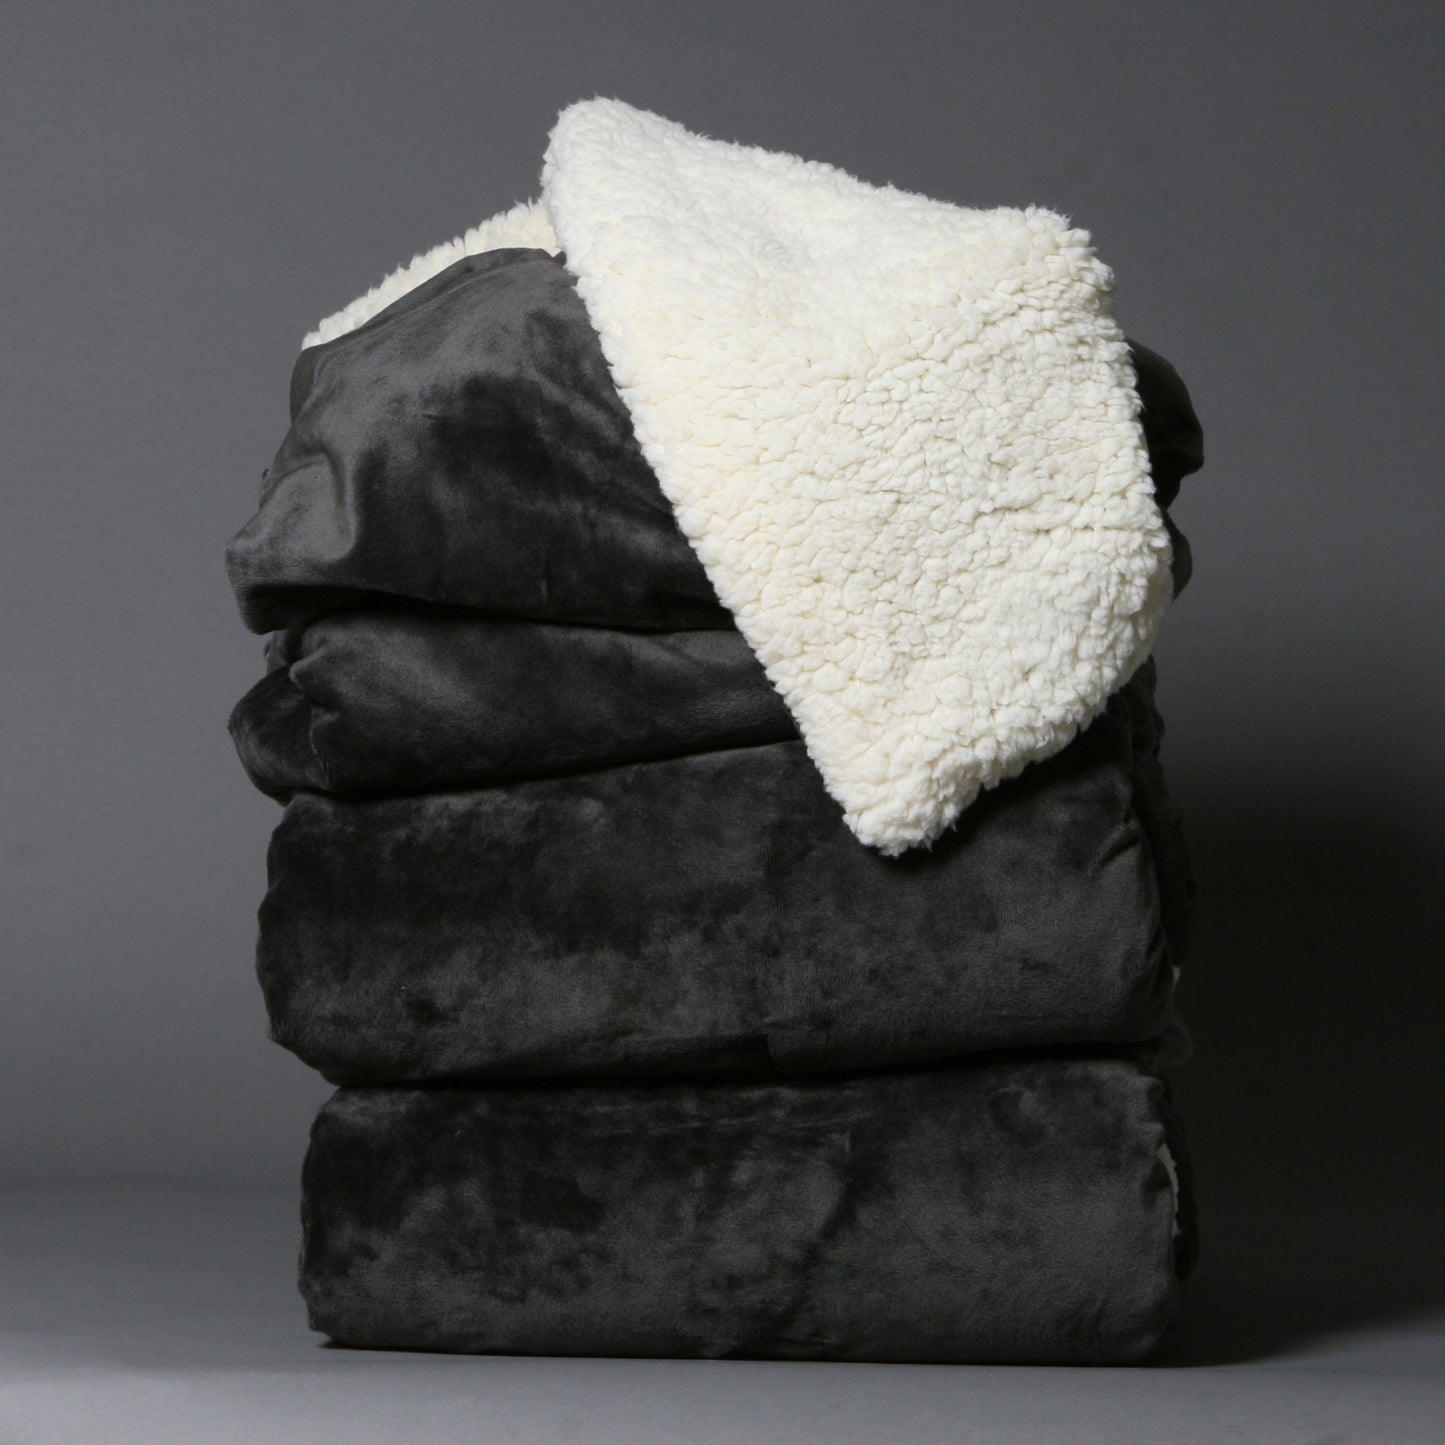 The Cozy Sherpa Blanket